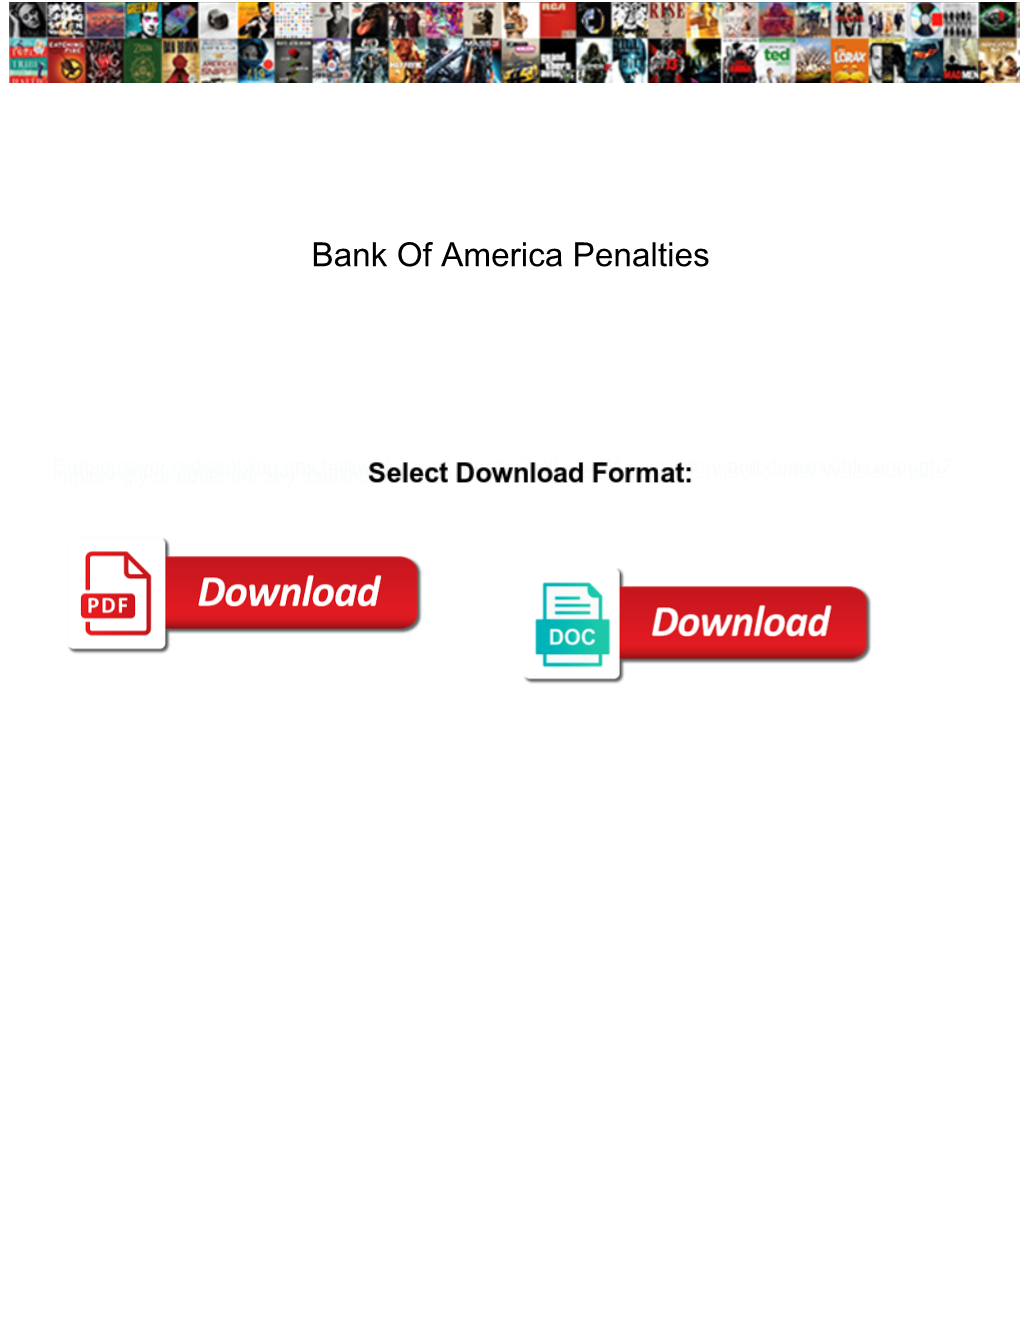 Bank of America Penalties